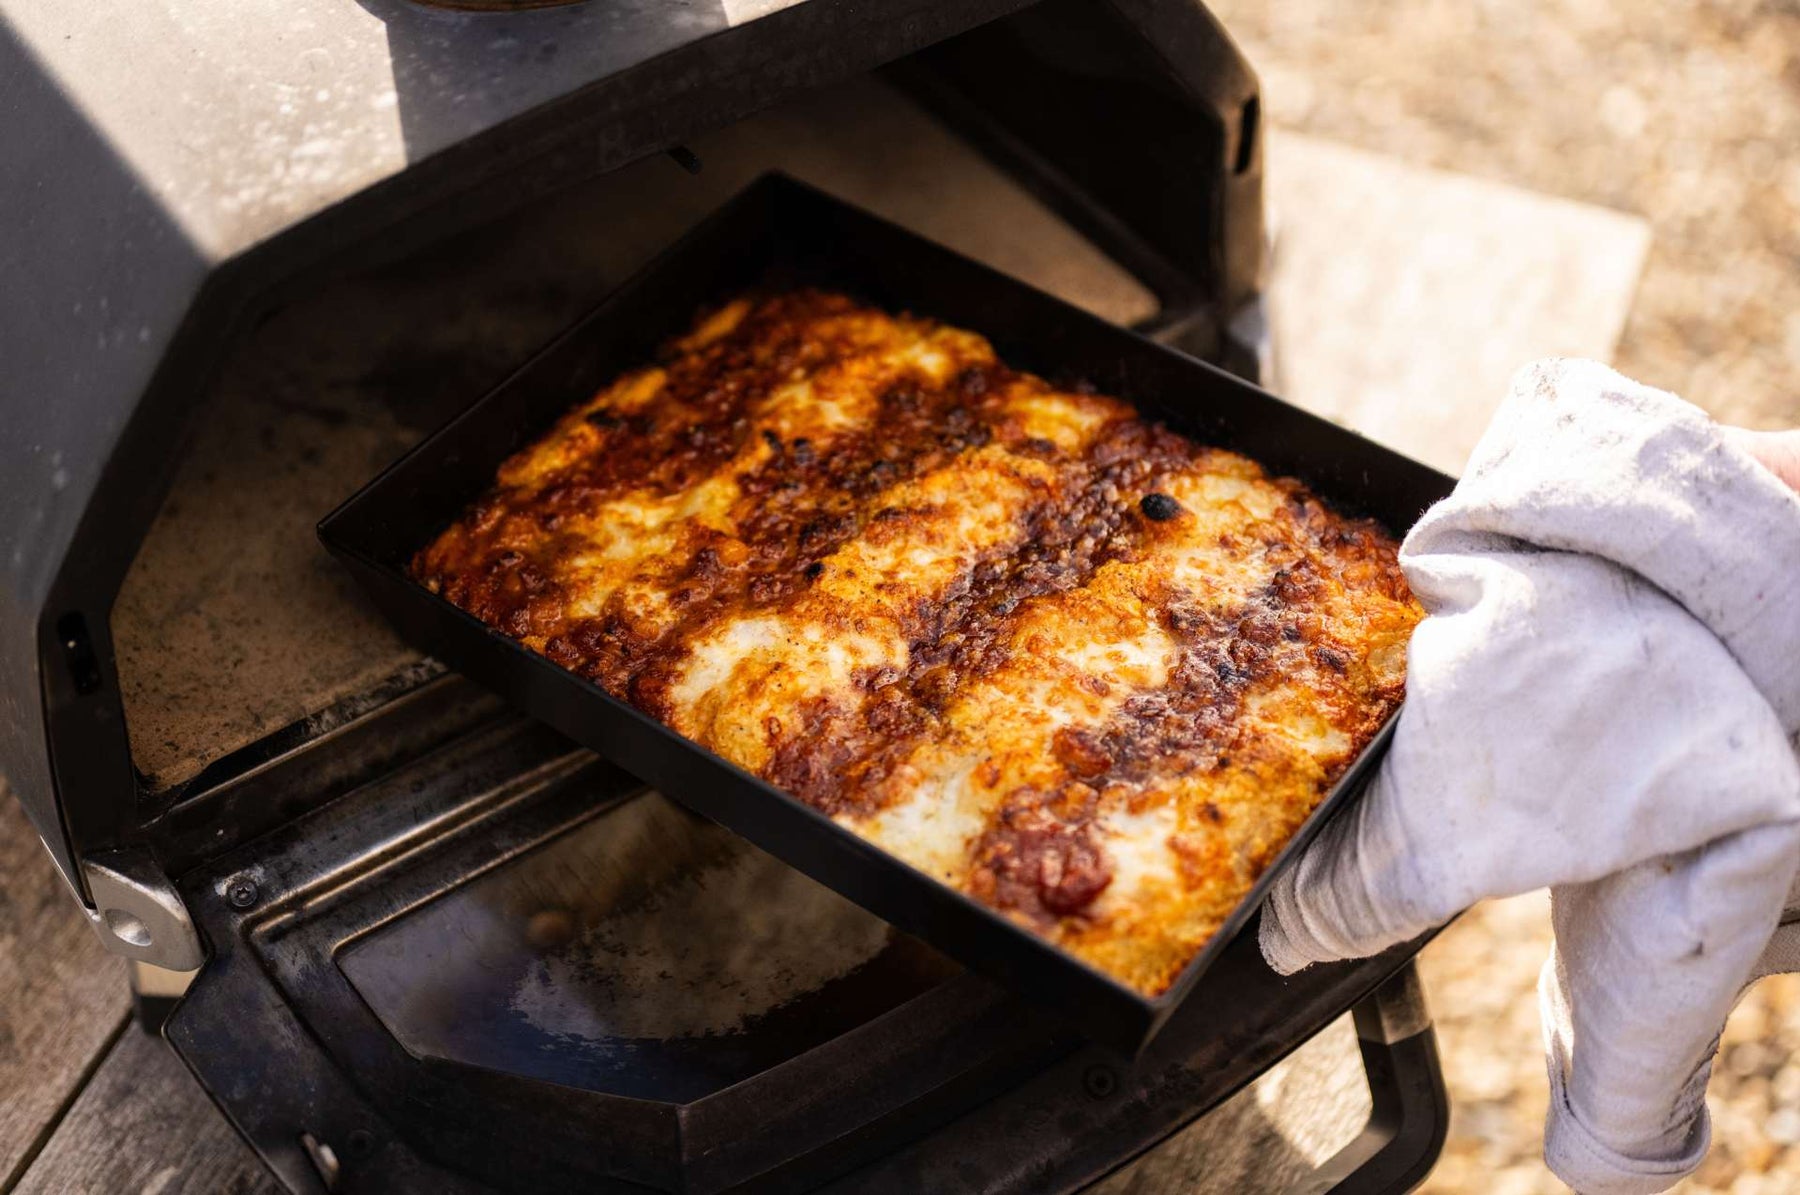 Detroit-style Pizza “Around the World”